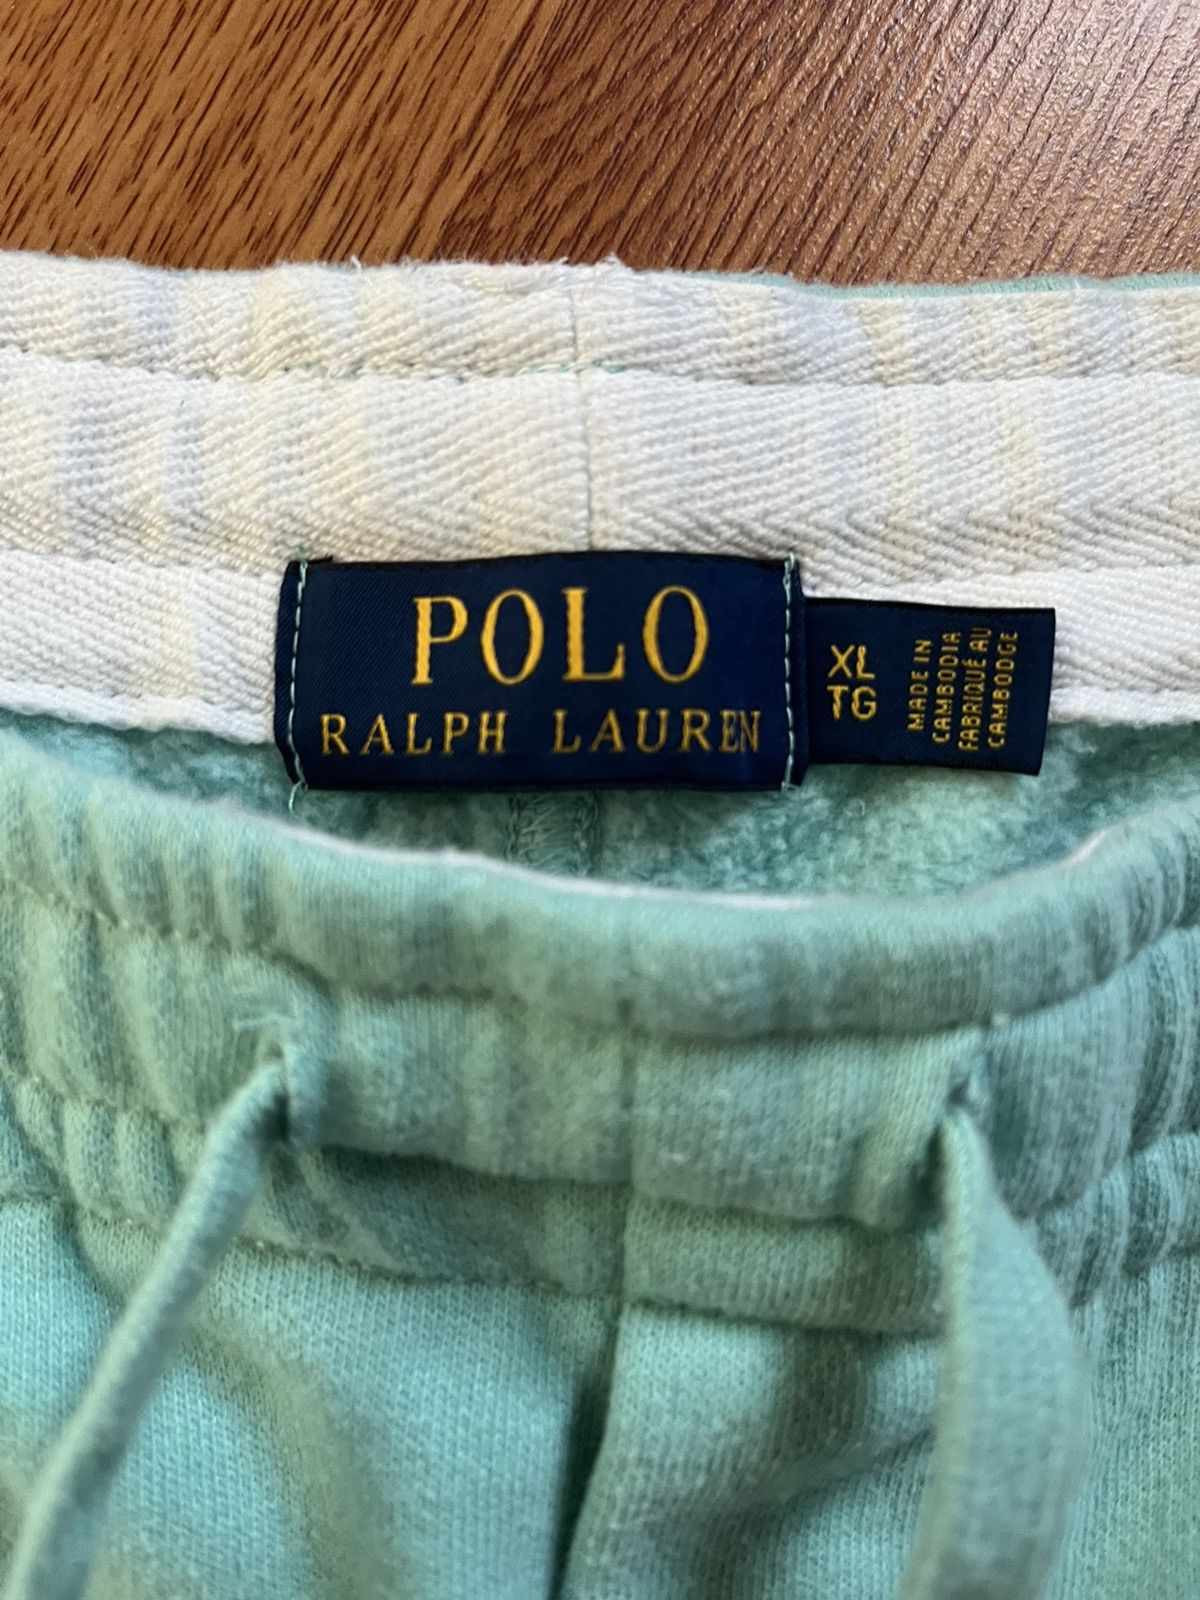 Polo Ralph Lauren Polo shorts Size US 36 / EU 52 - 3 Thumbnail